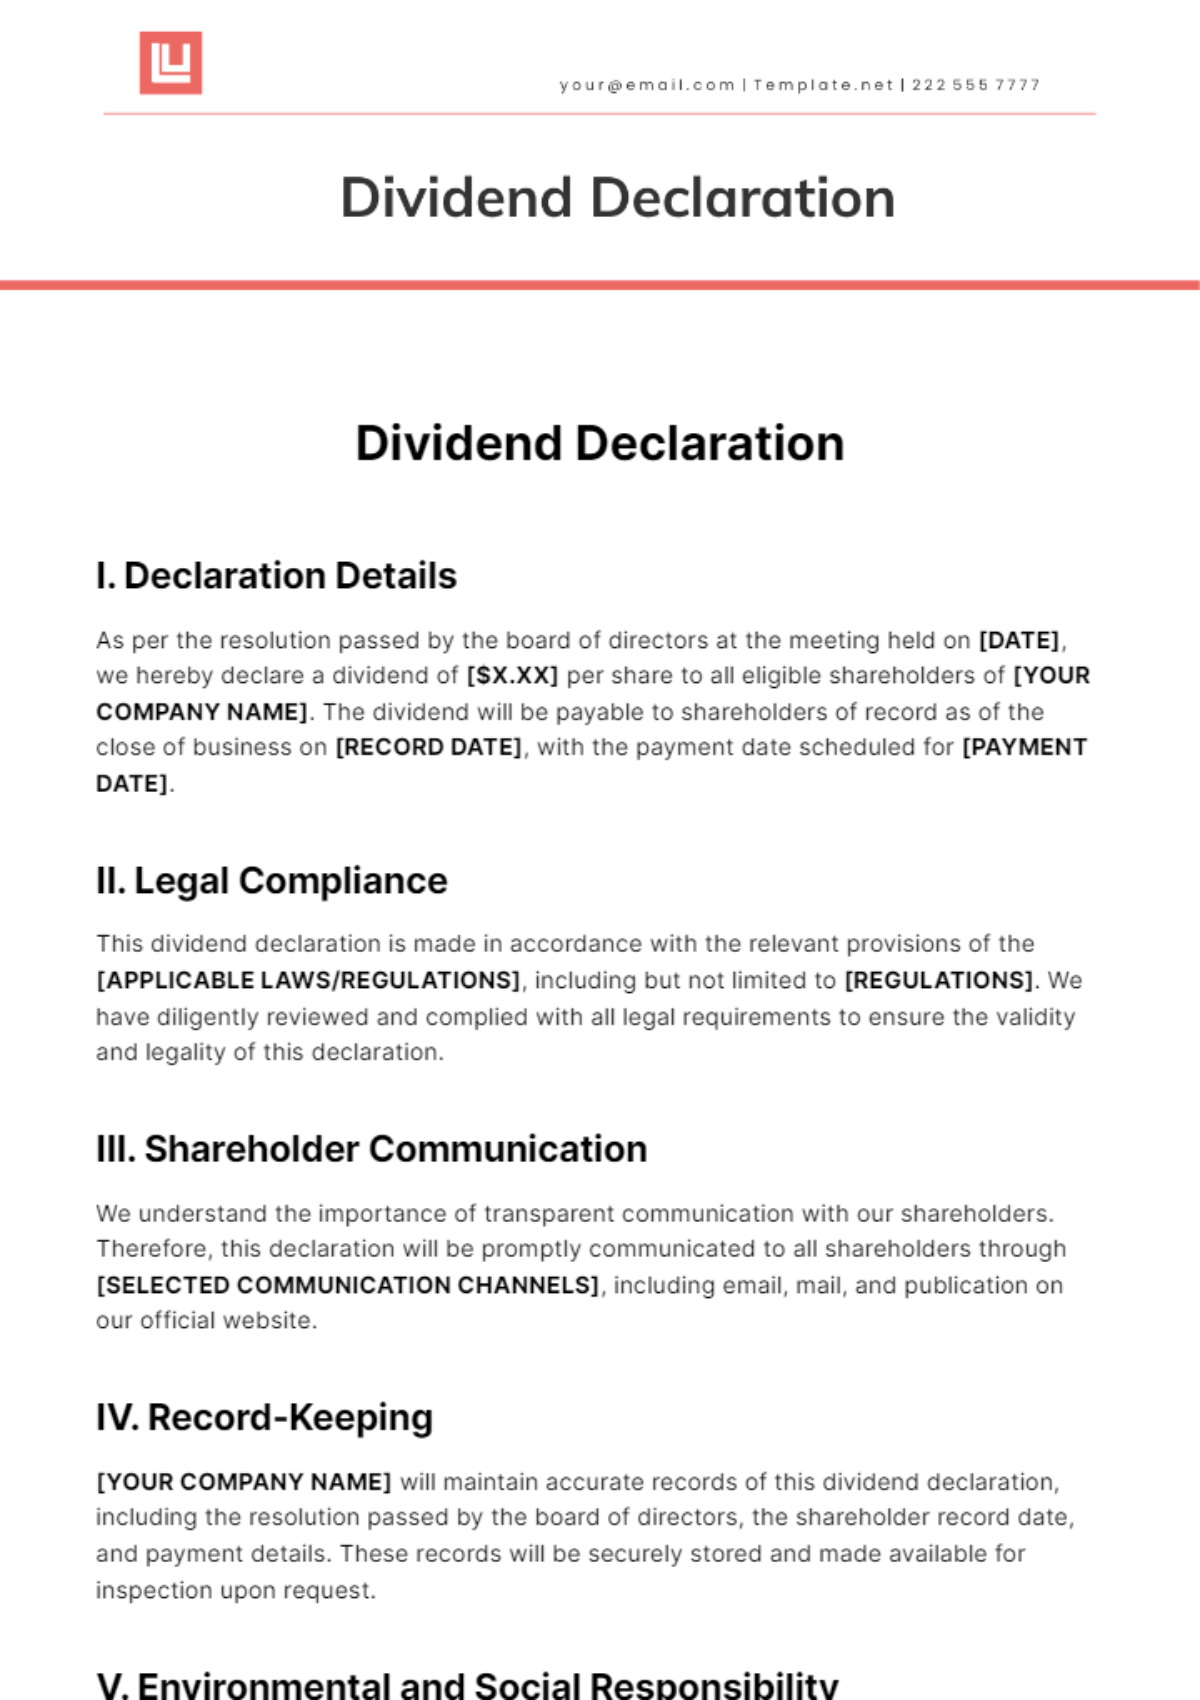 Dividend Declaration Template